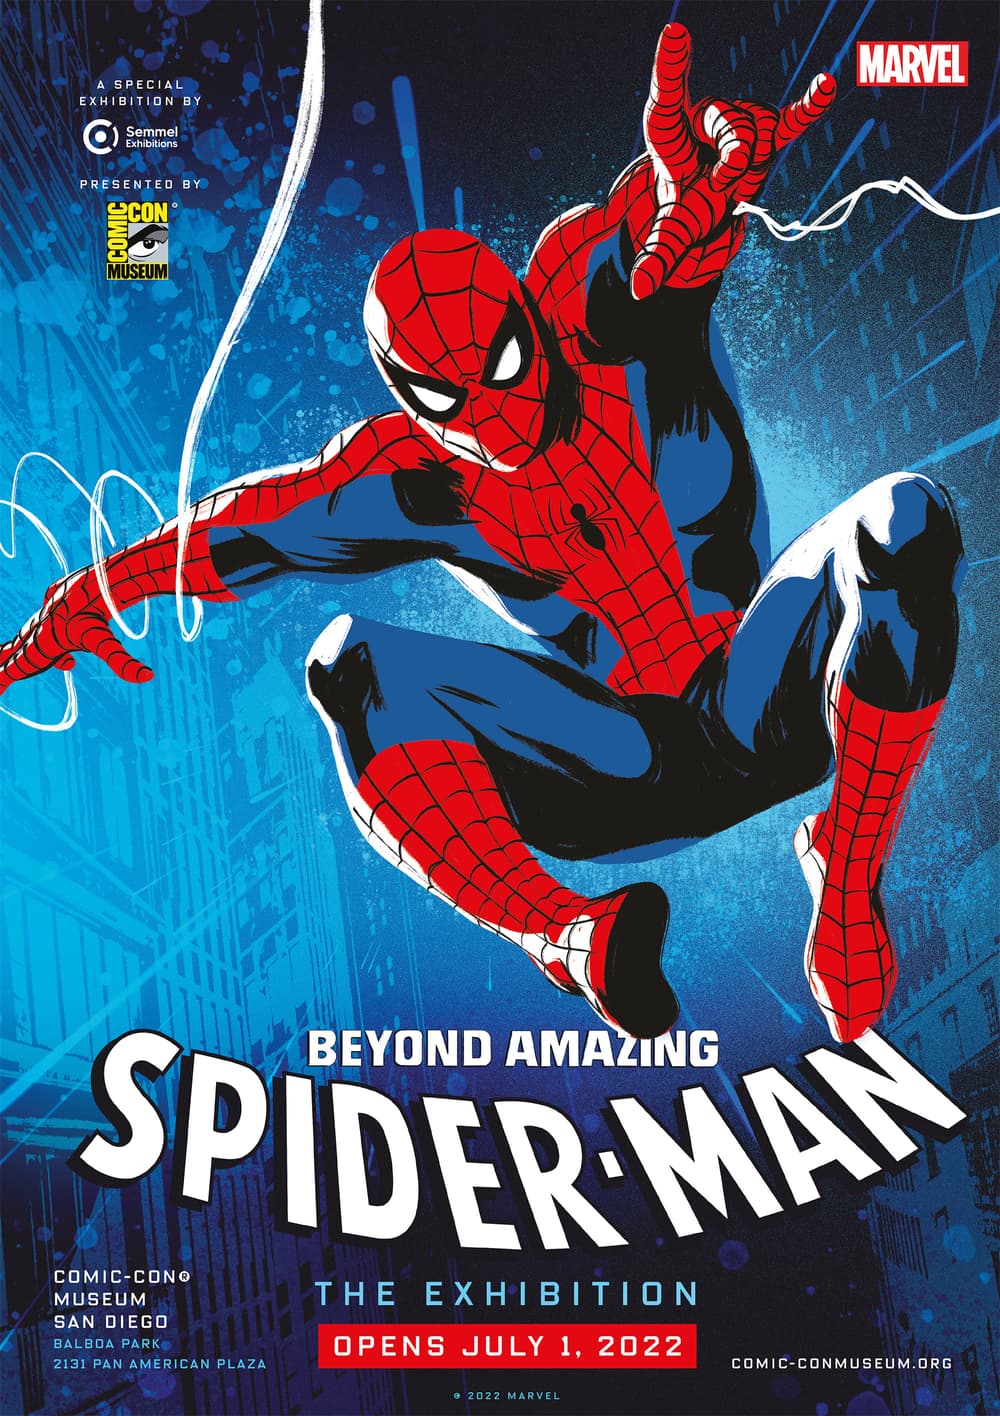 Beyond Amazing: Spider-Man – The Exhibition